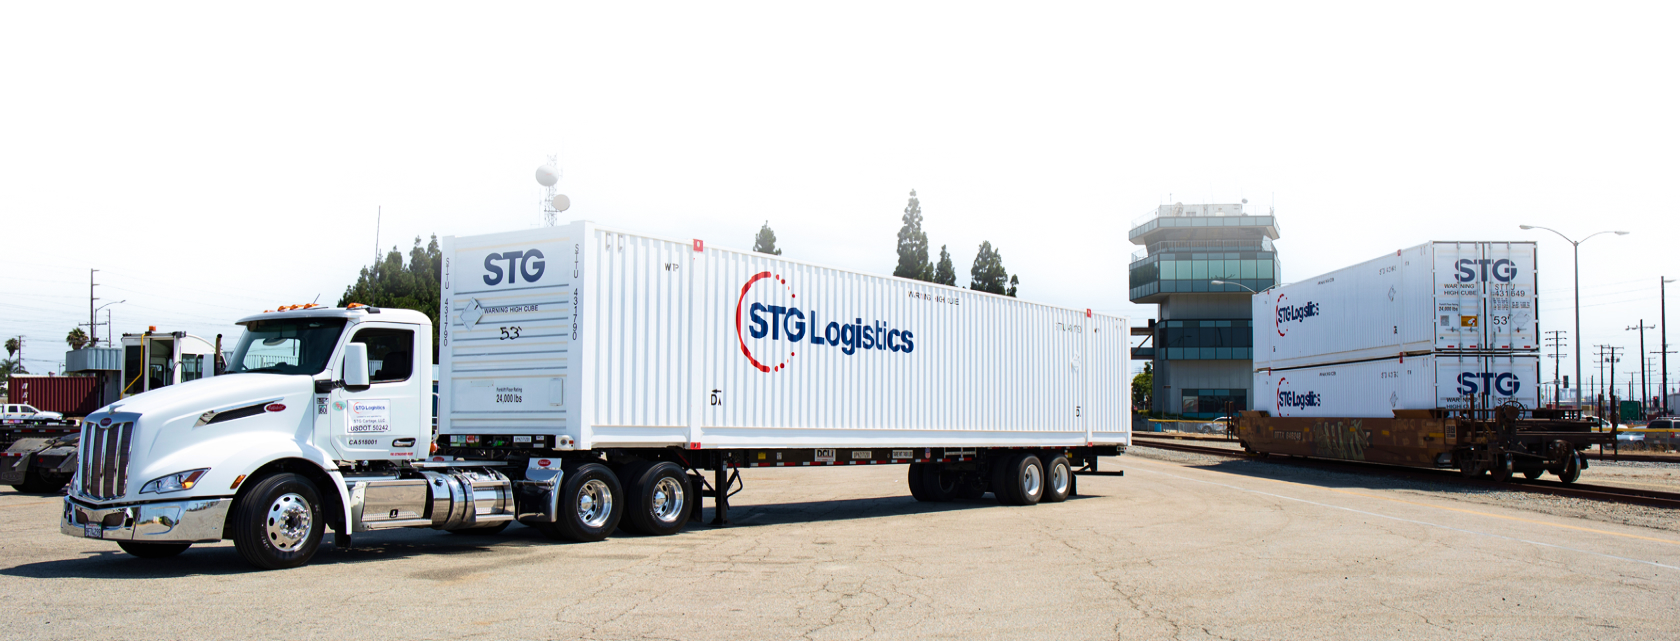 STG logistics truck.